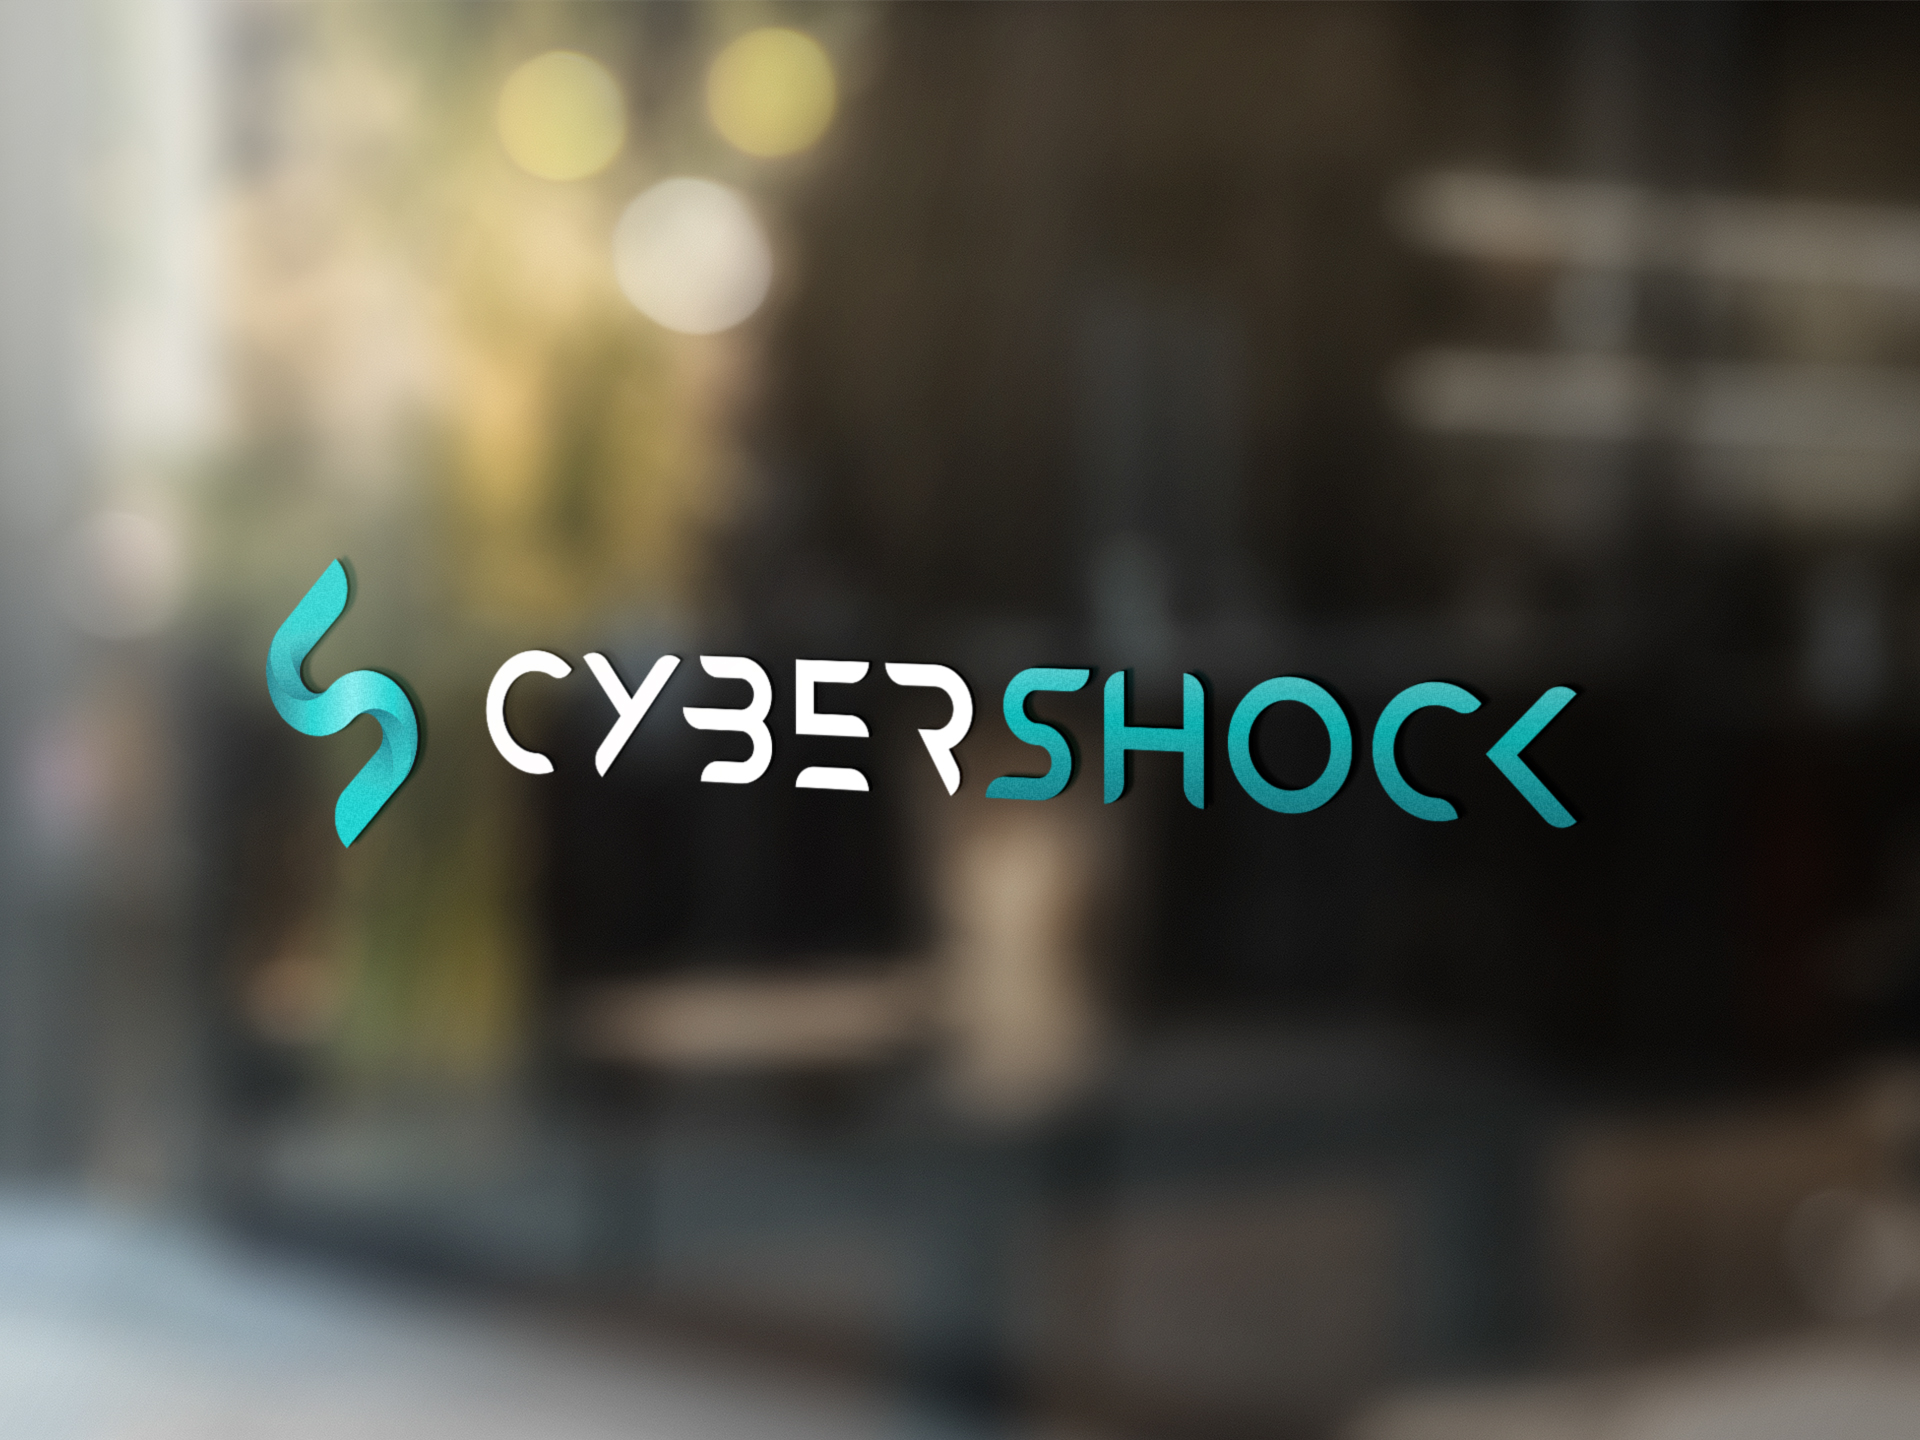 Cybershock window signage